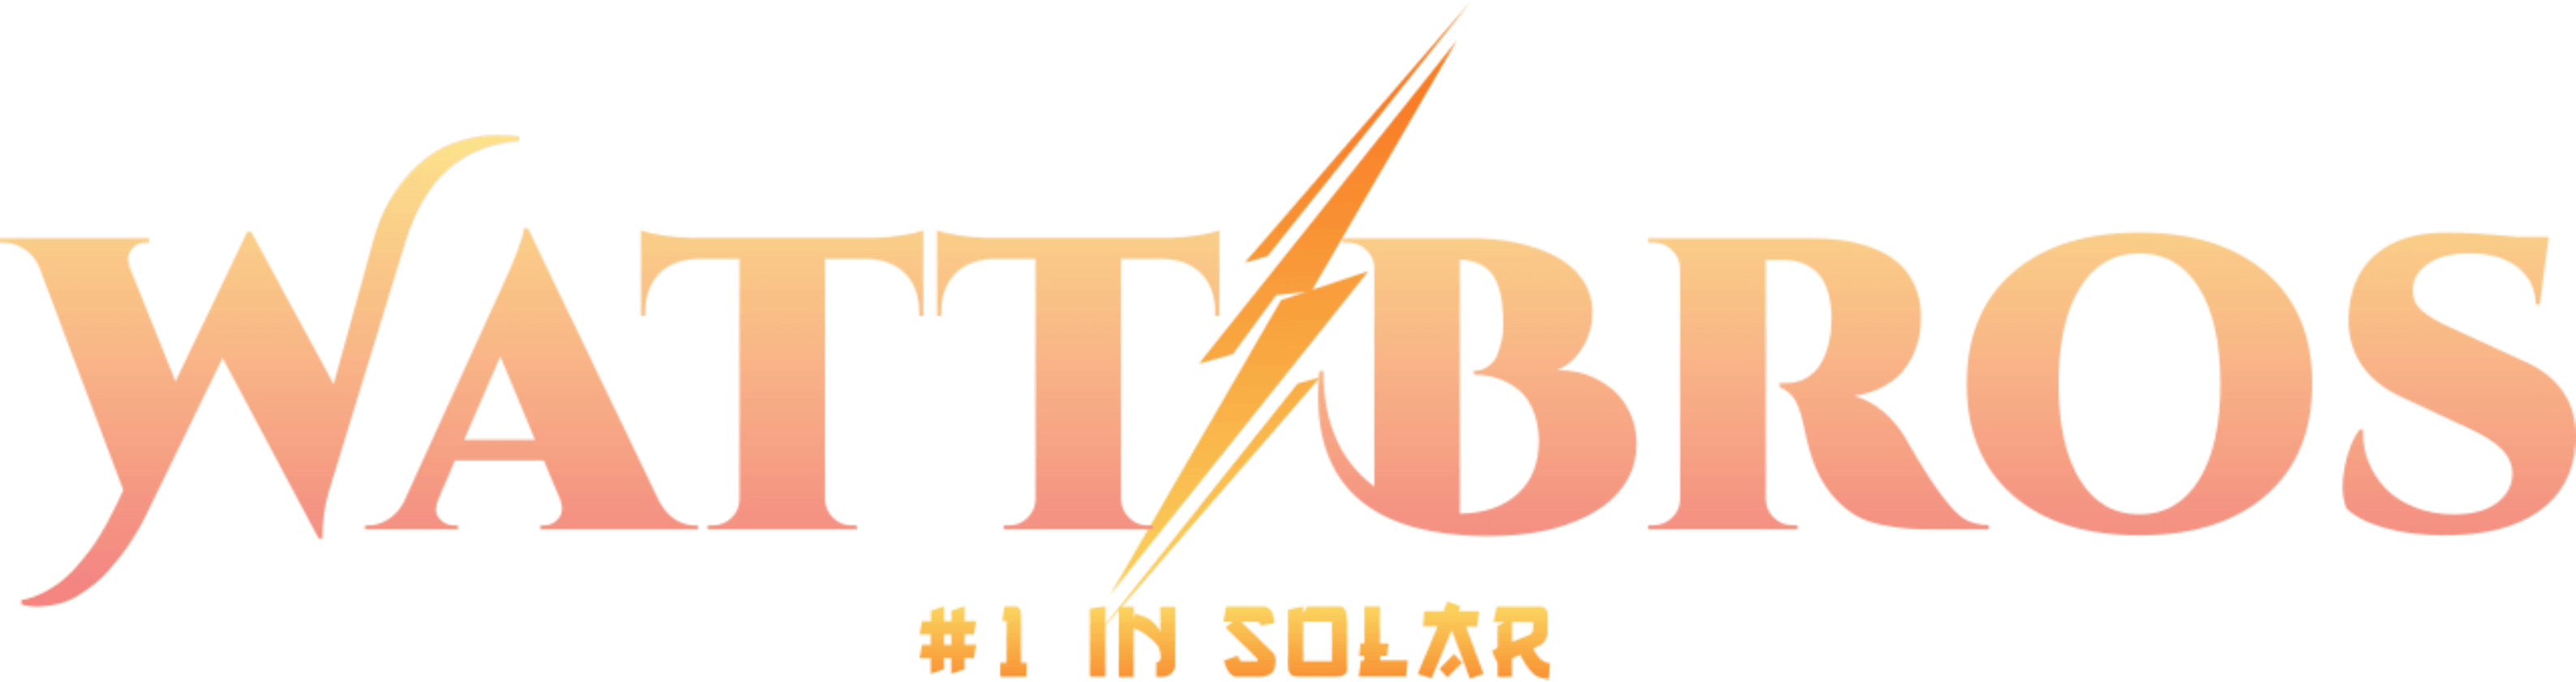 Watt Bros Solar - AZ Solar Company Logo